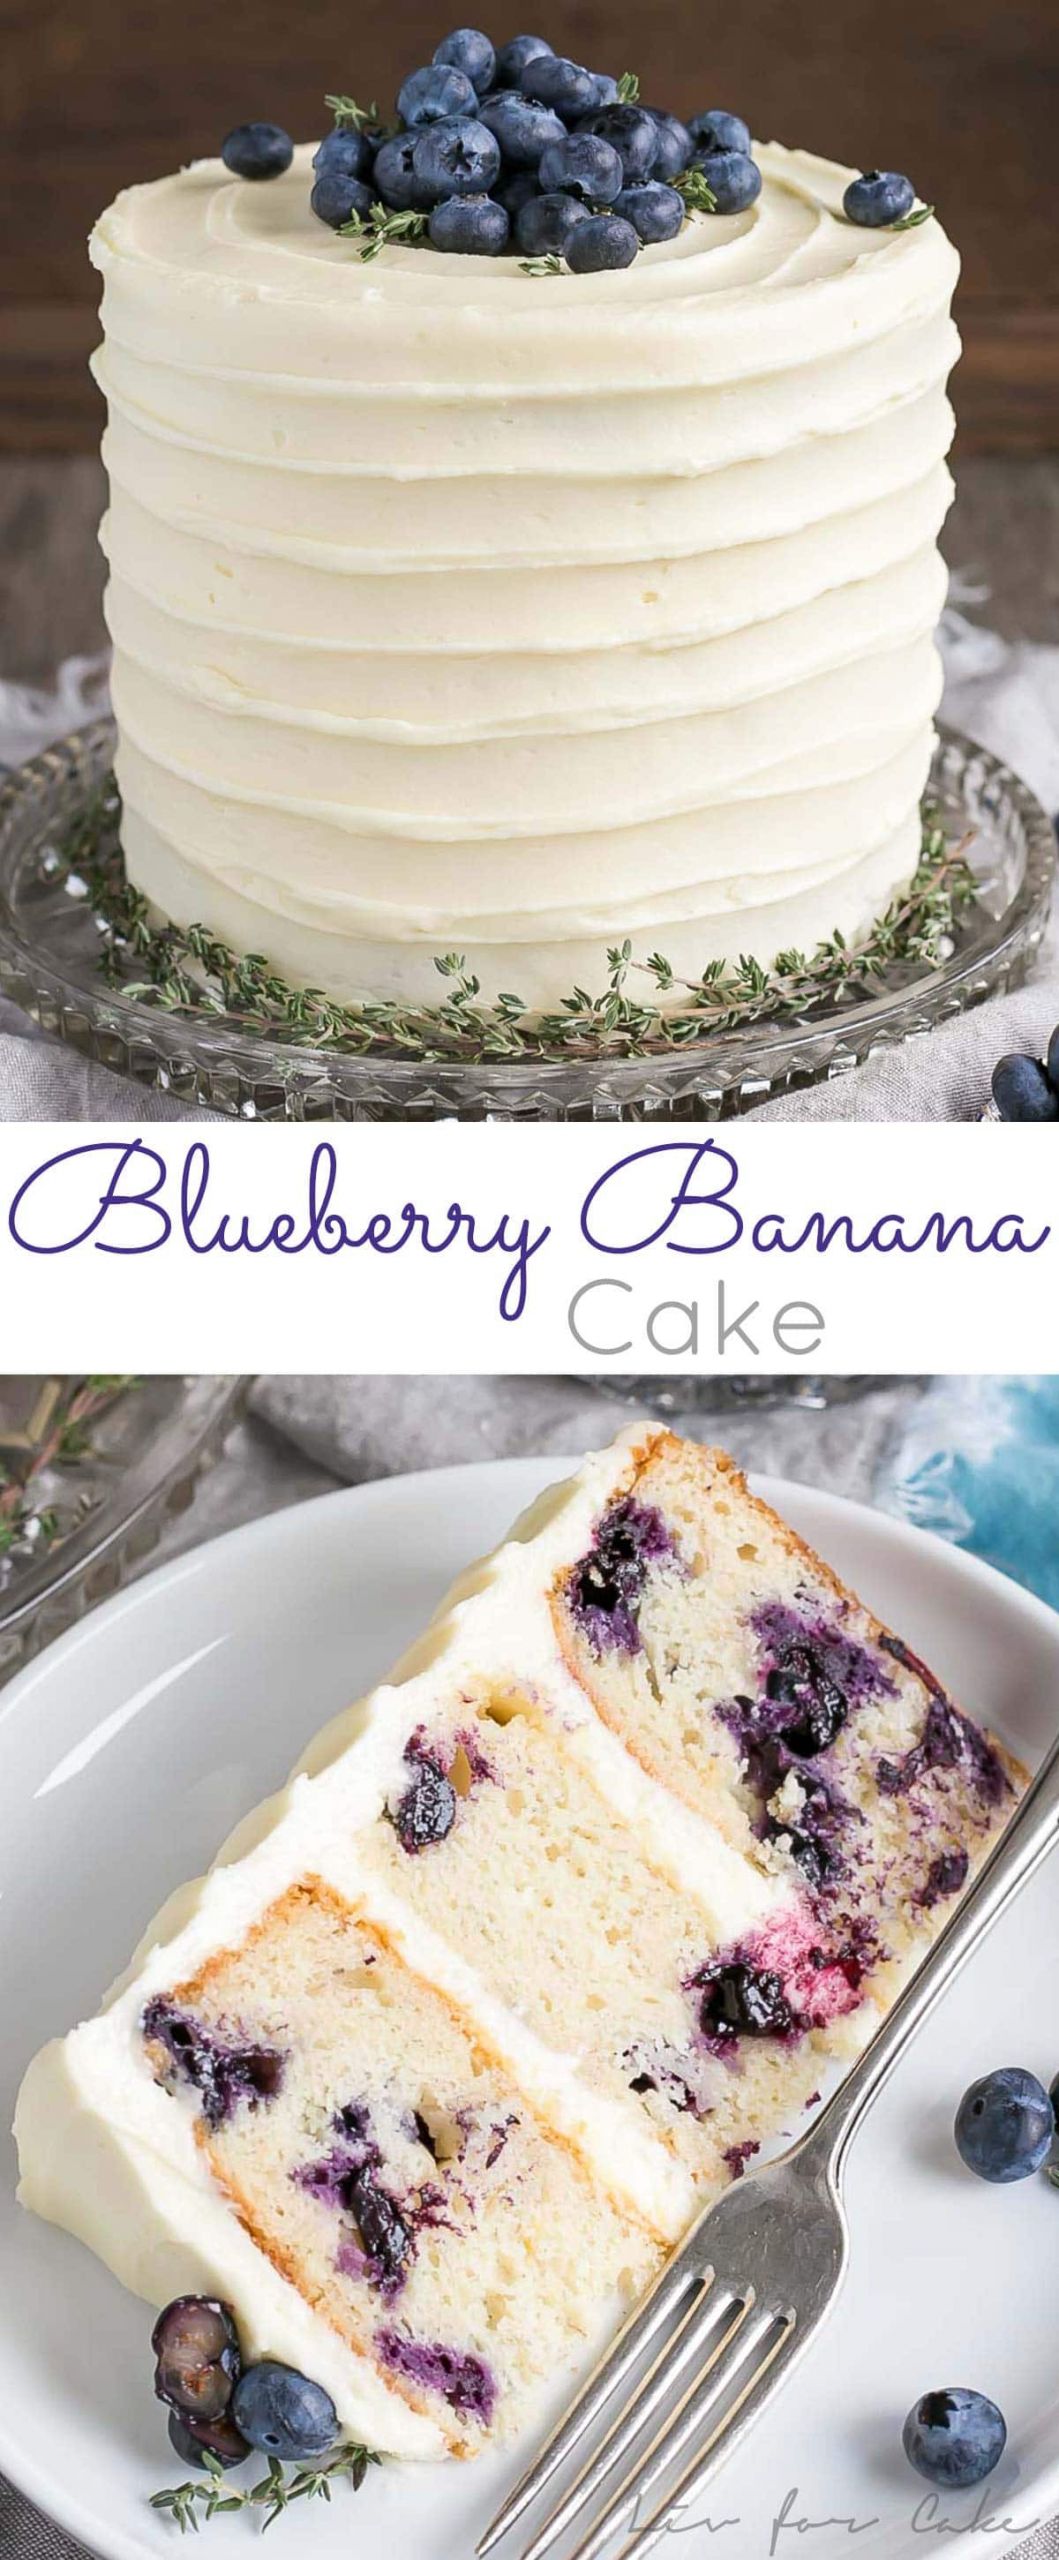 Blueberry Birthday Cake Recipe
 Blueberry Banana Cake with Cream Cheese Frosting